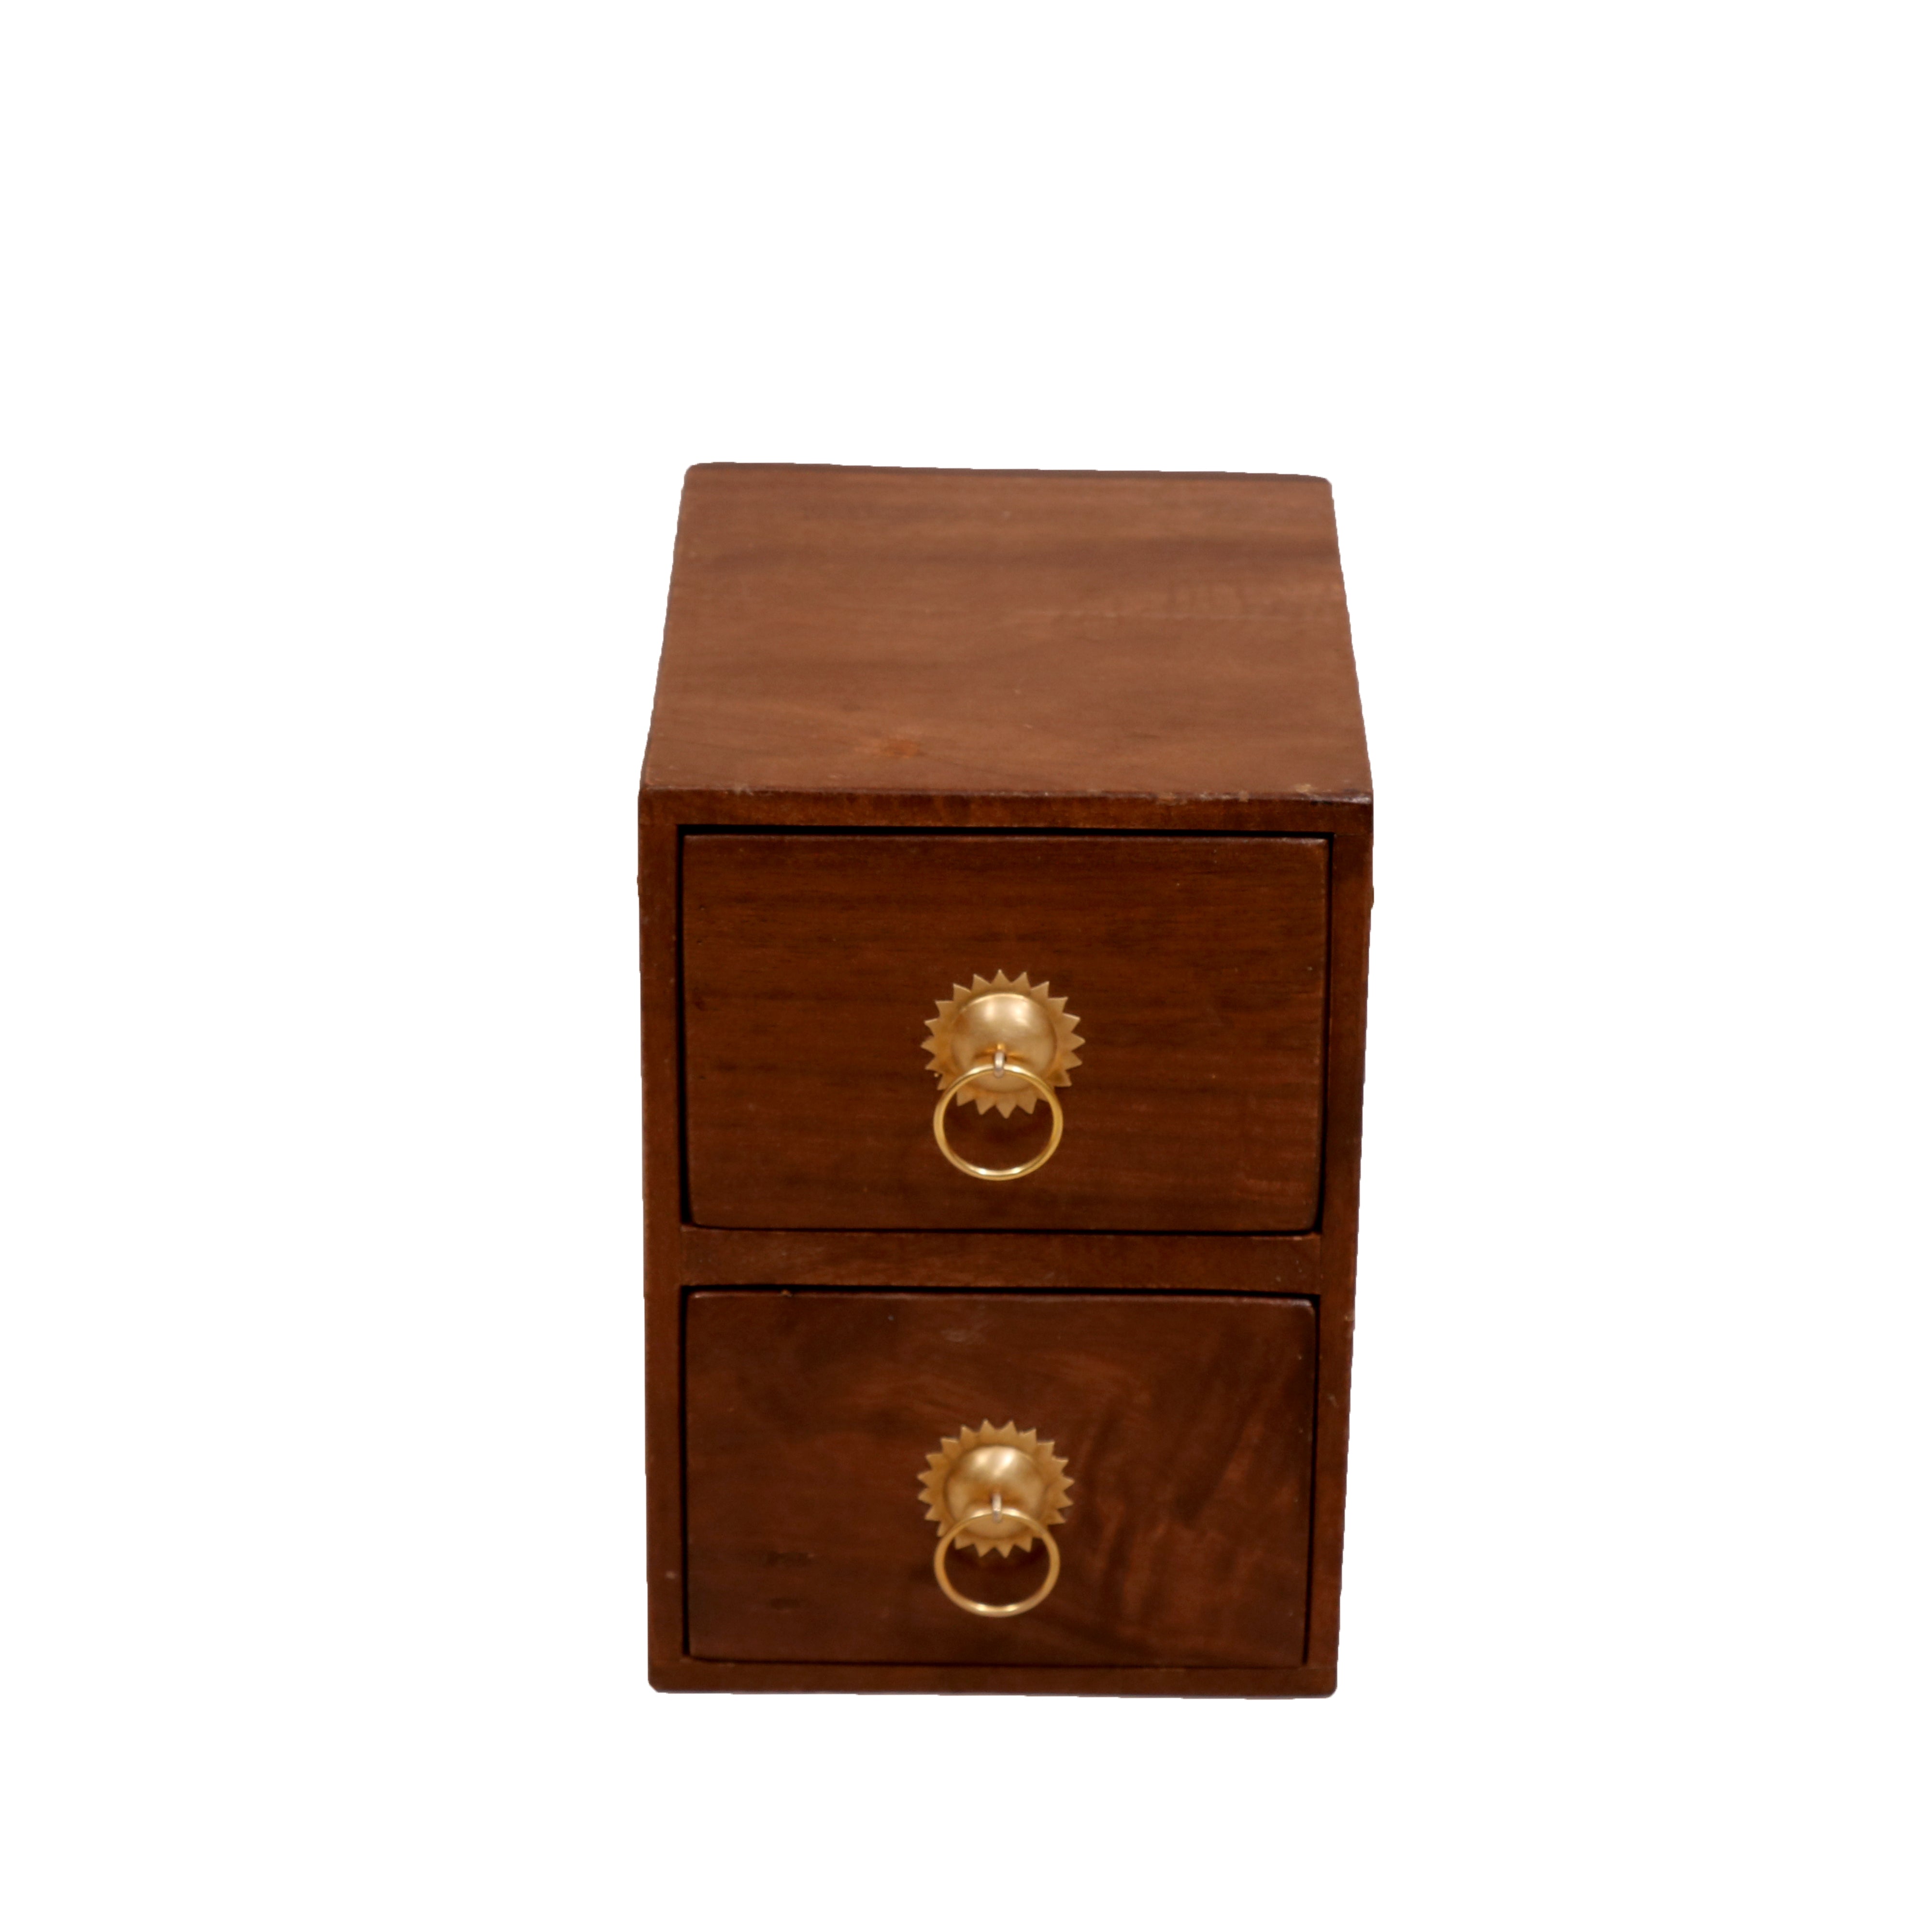 Solid Wood 2-Drawer Set with Holder (7 x 9 x 10 Inch) Desk Organizer